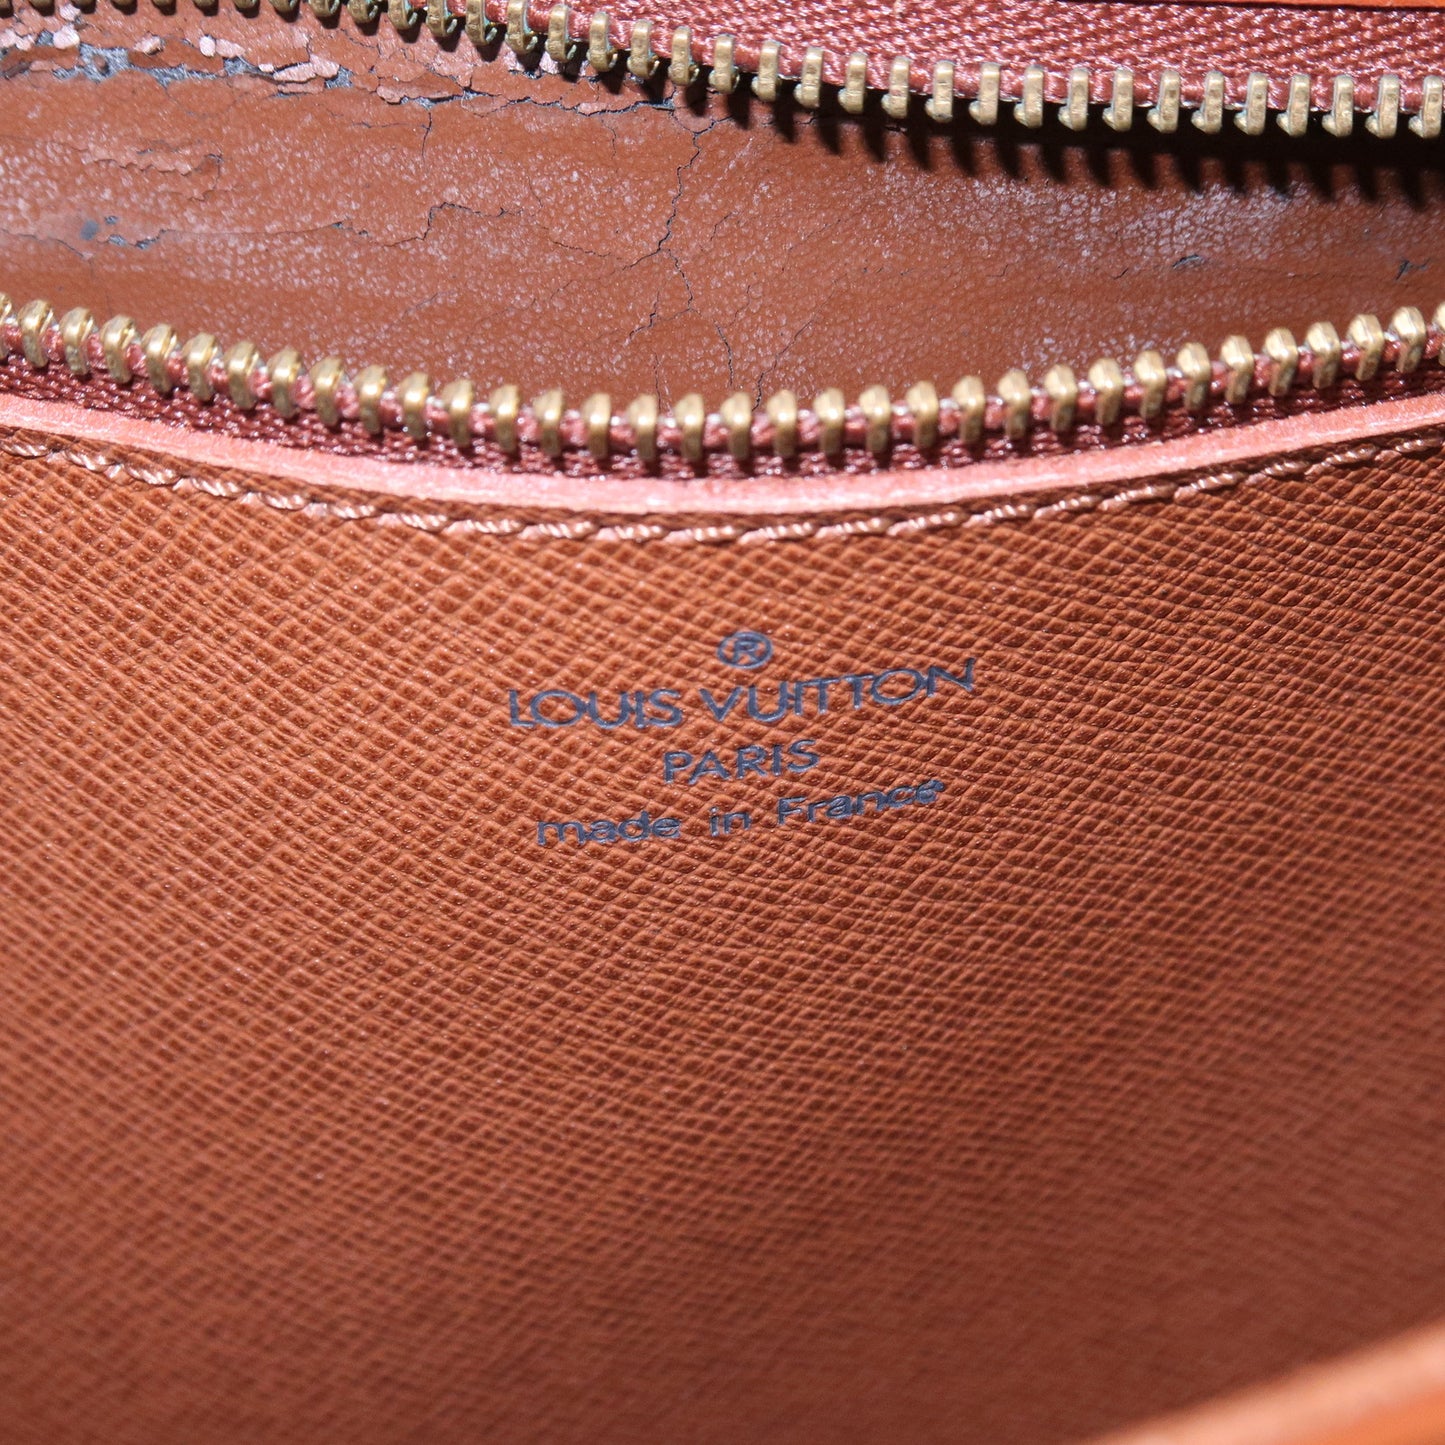 Louis-Vuitton-Epi-Saint-Cloud-Shoulder-Bag-Kenya-Brown-M52193